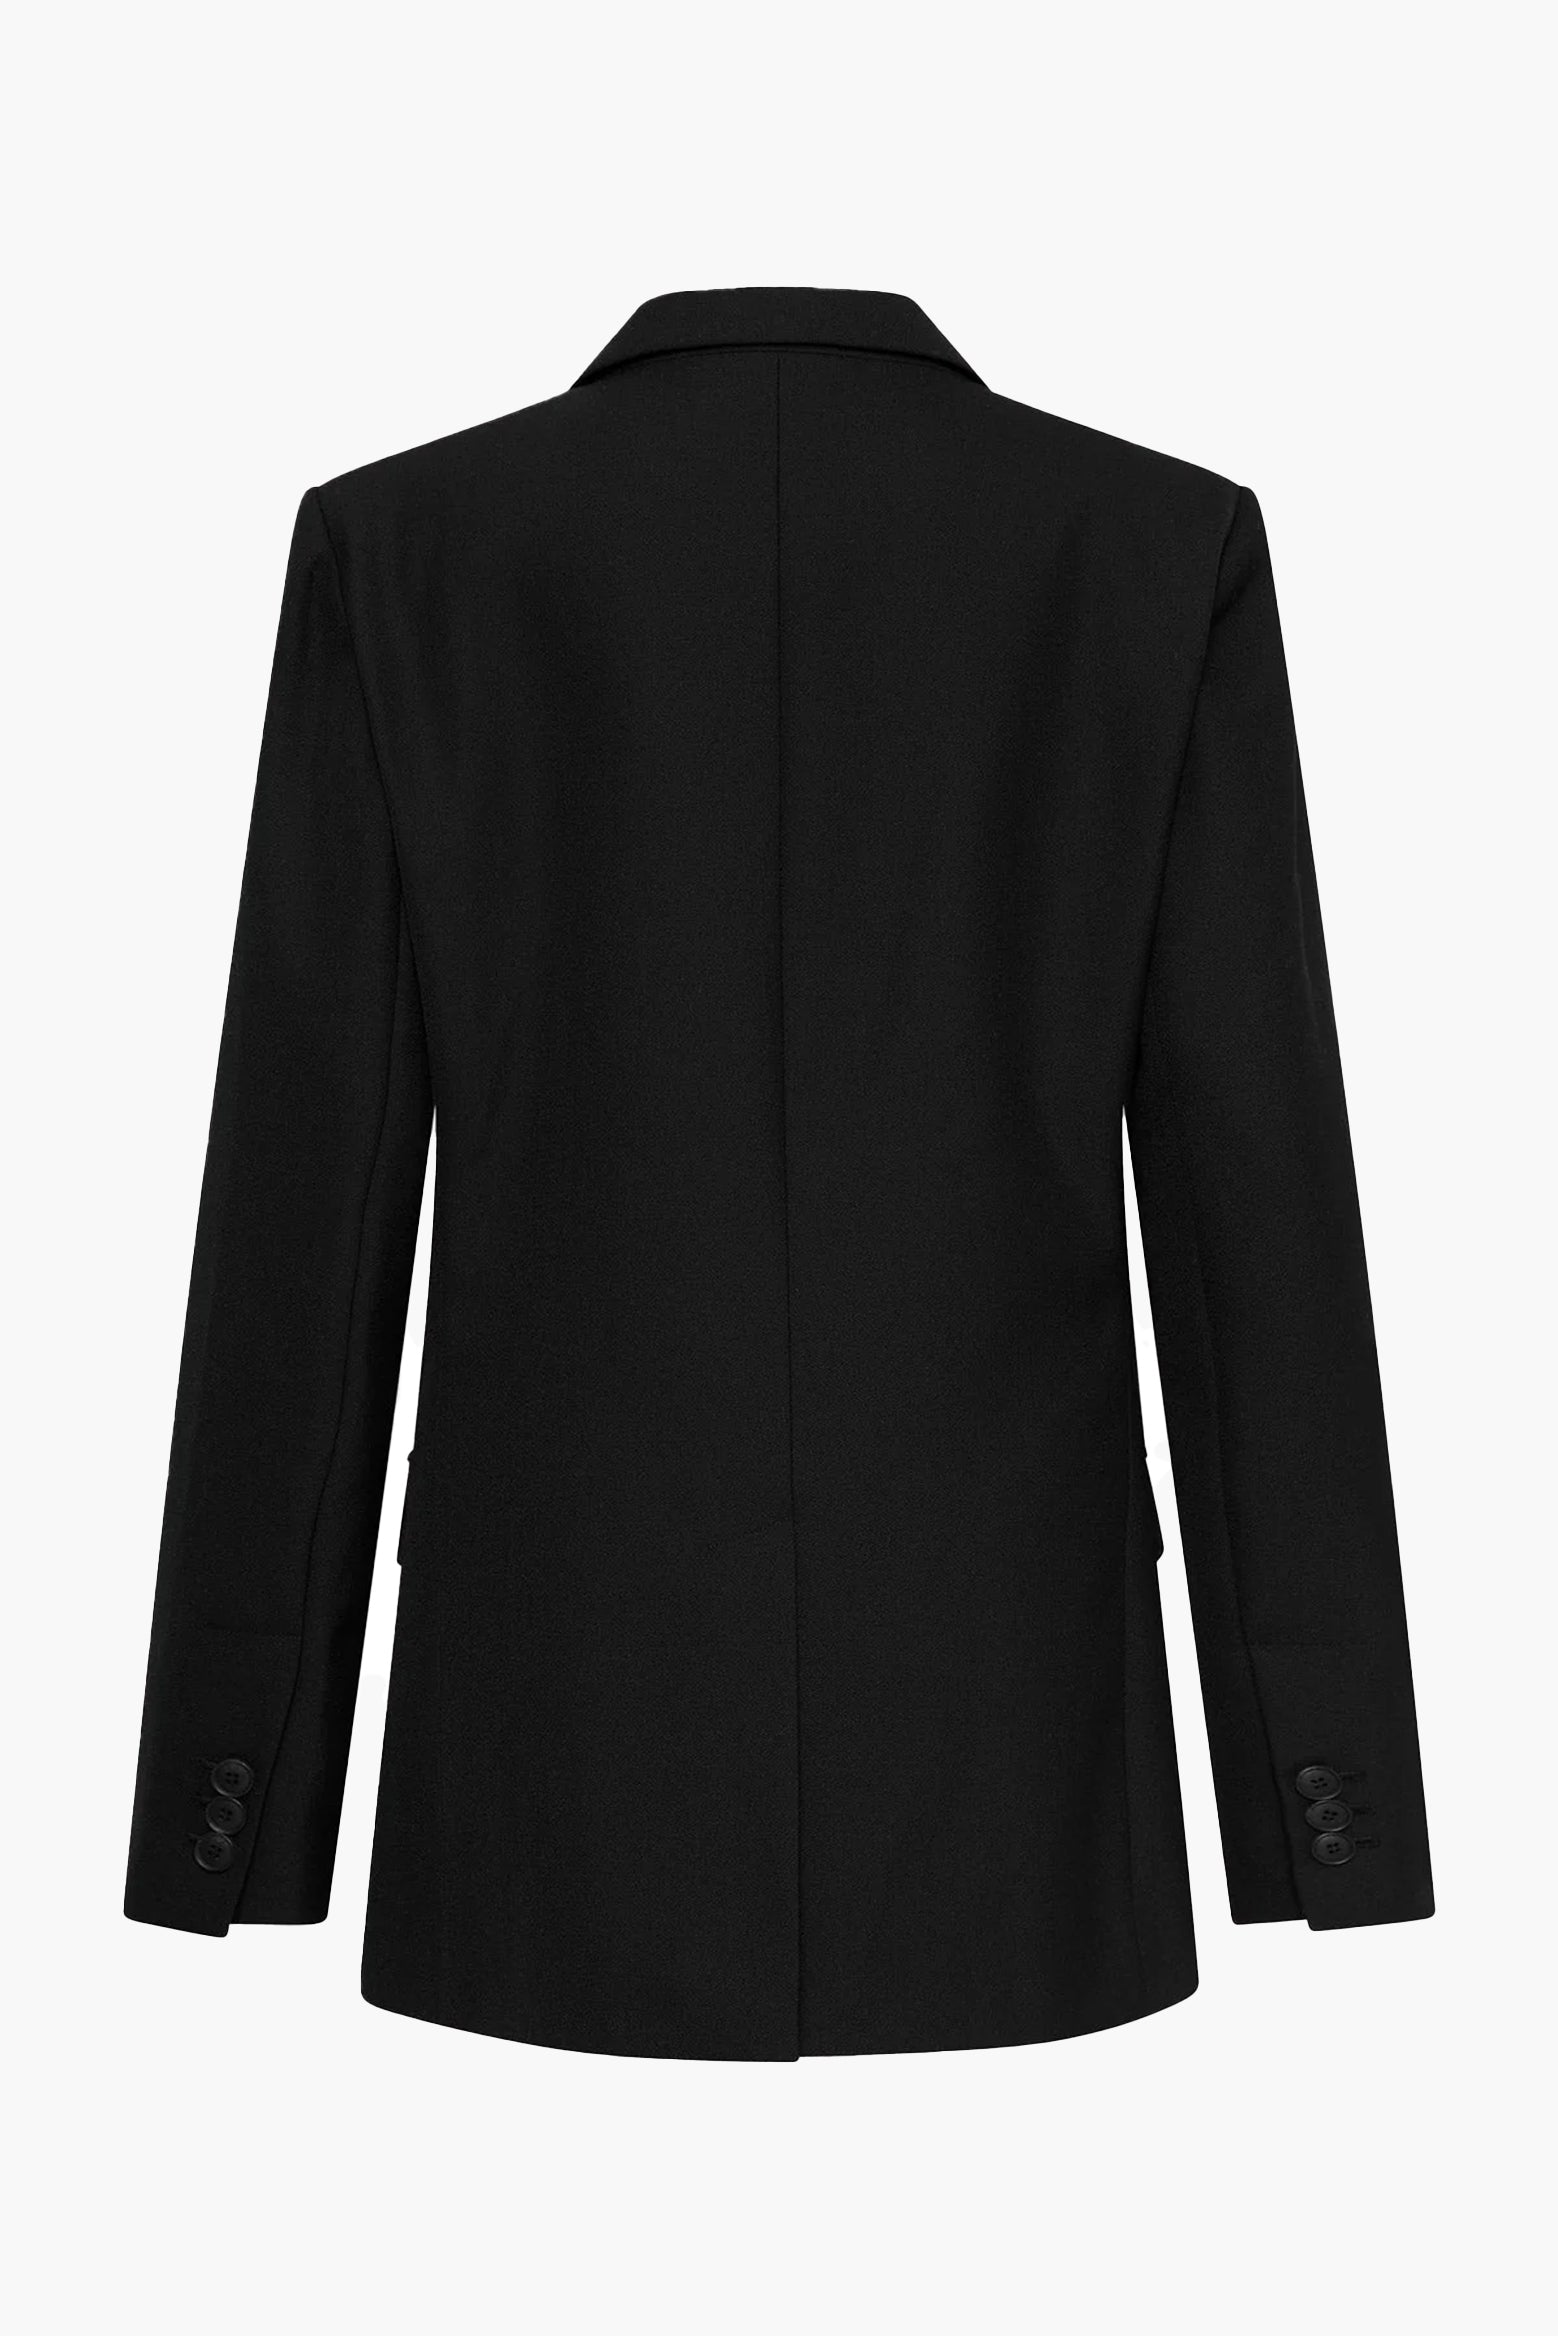 ST. AGNI Carter Blazer in Black | The New Trend Australia